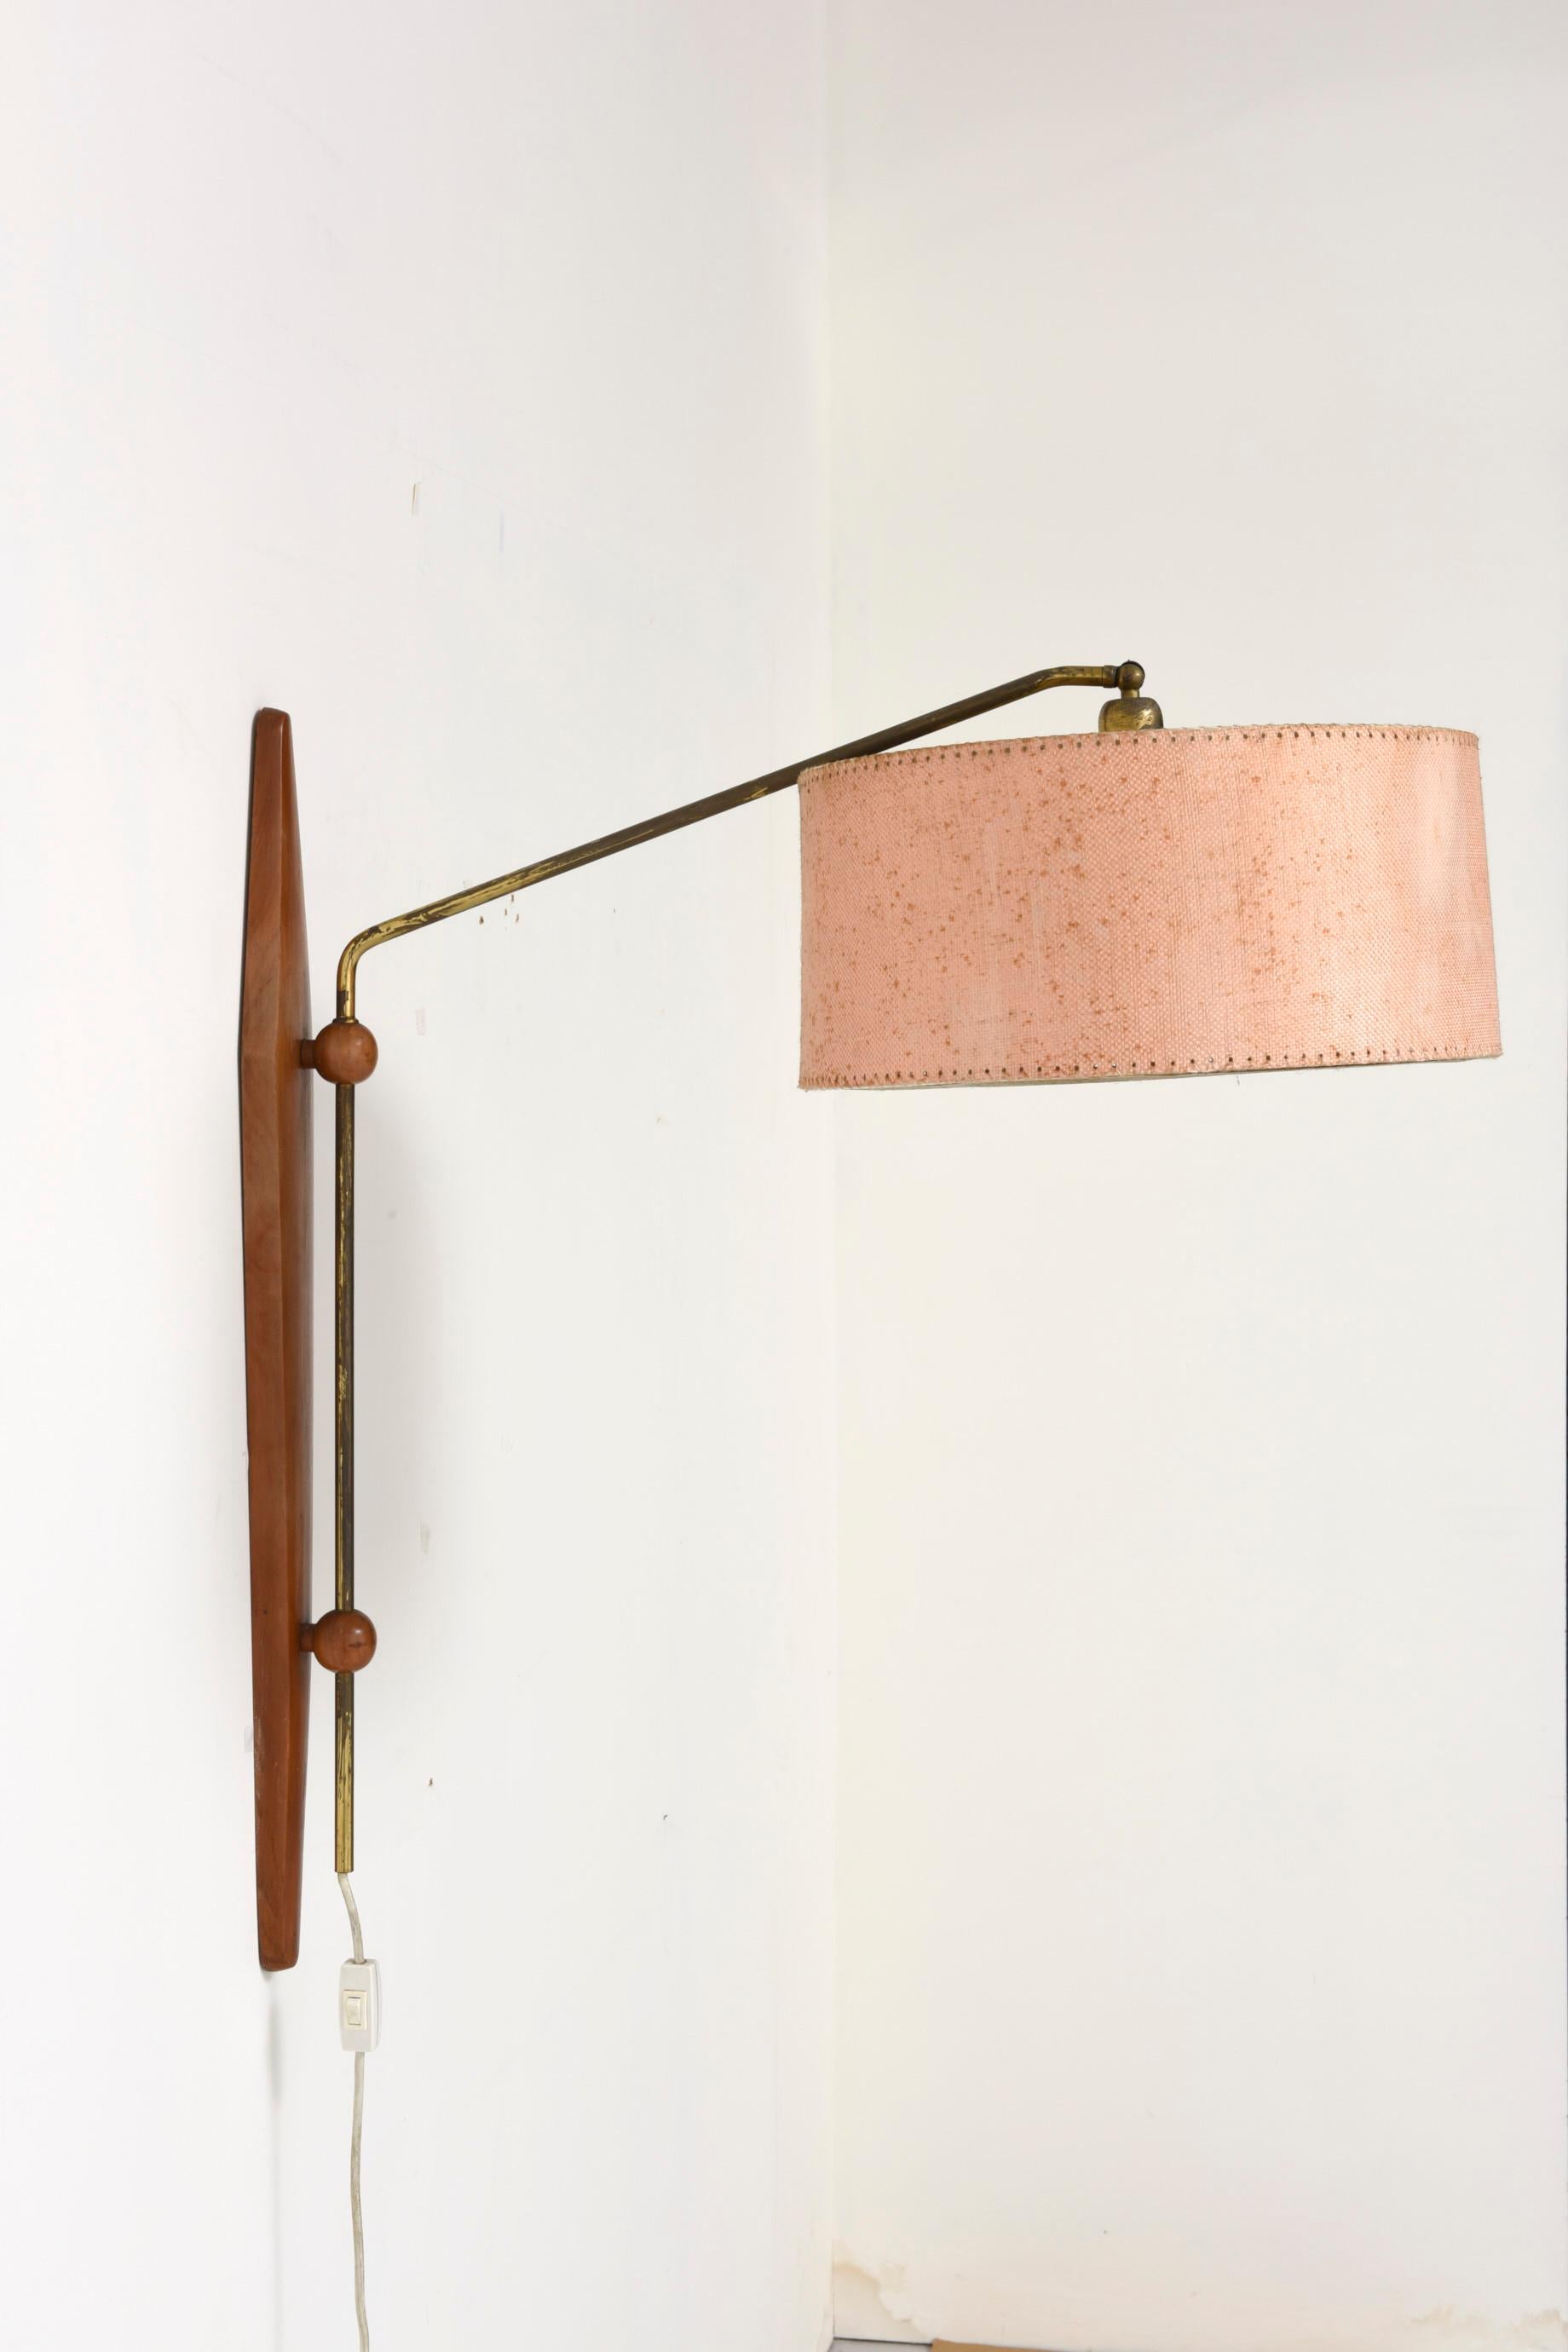 Scandinavian Modern Mid-Century Danish Adjustable Teak and Brass Wall Lamp, 1958 For Sale